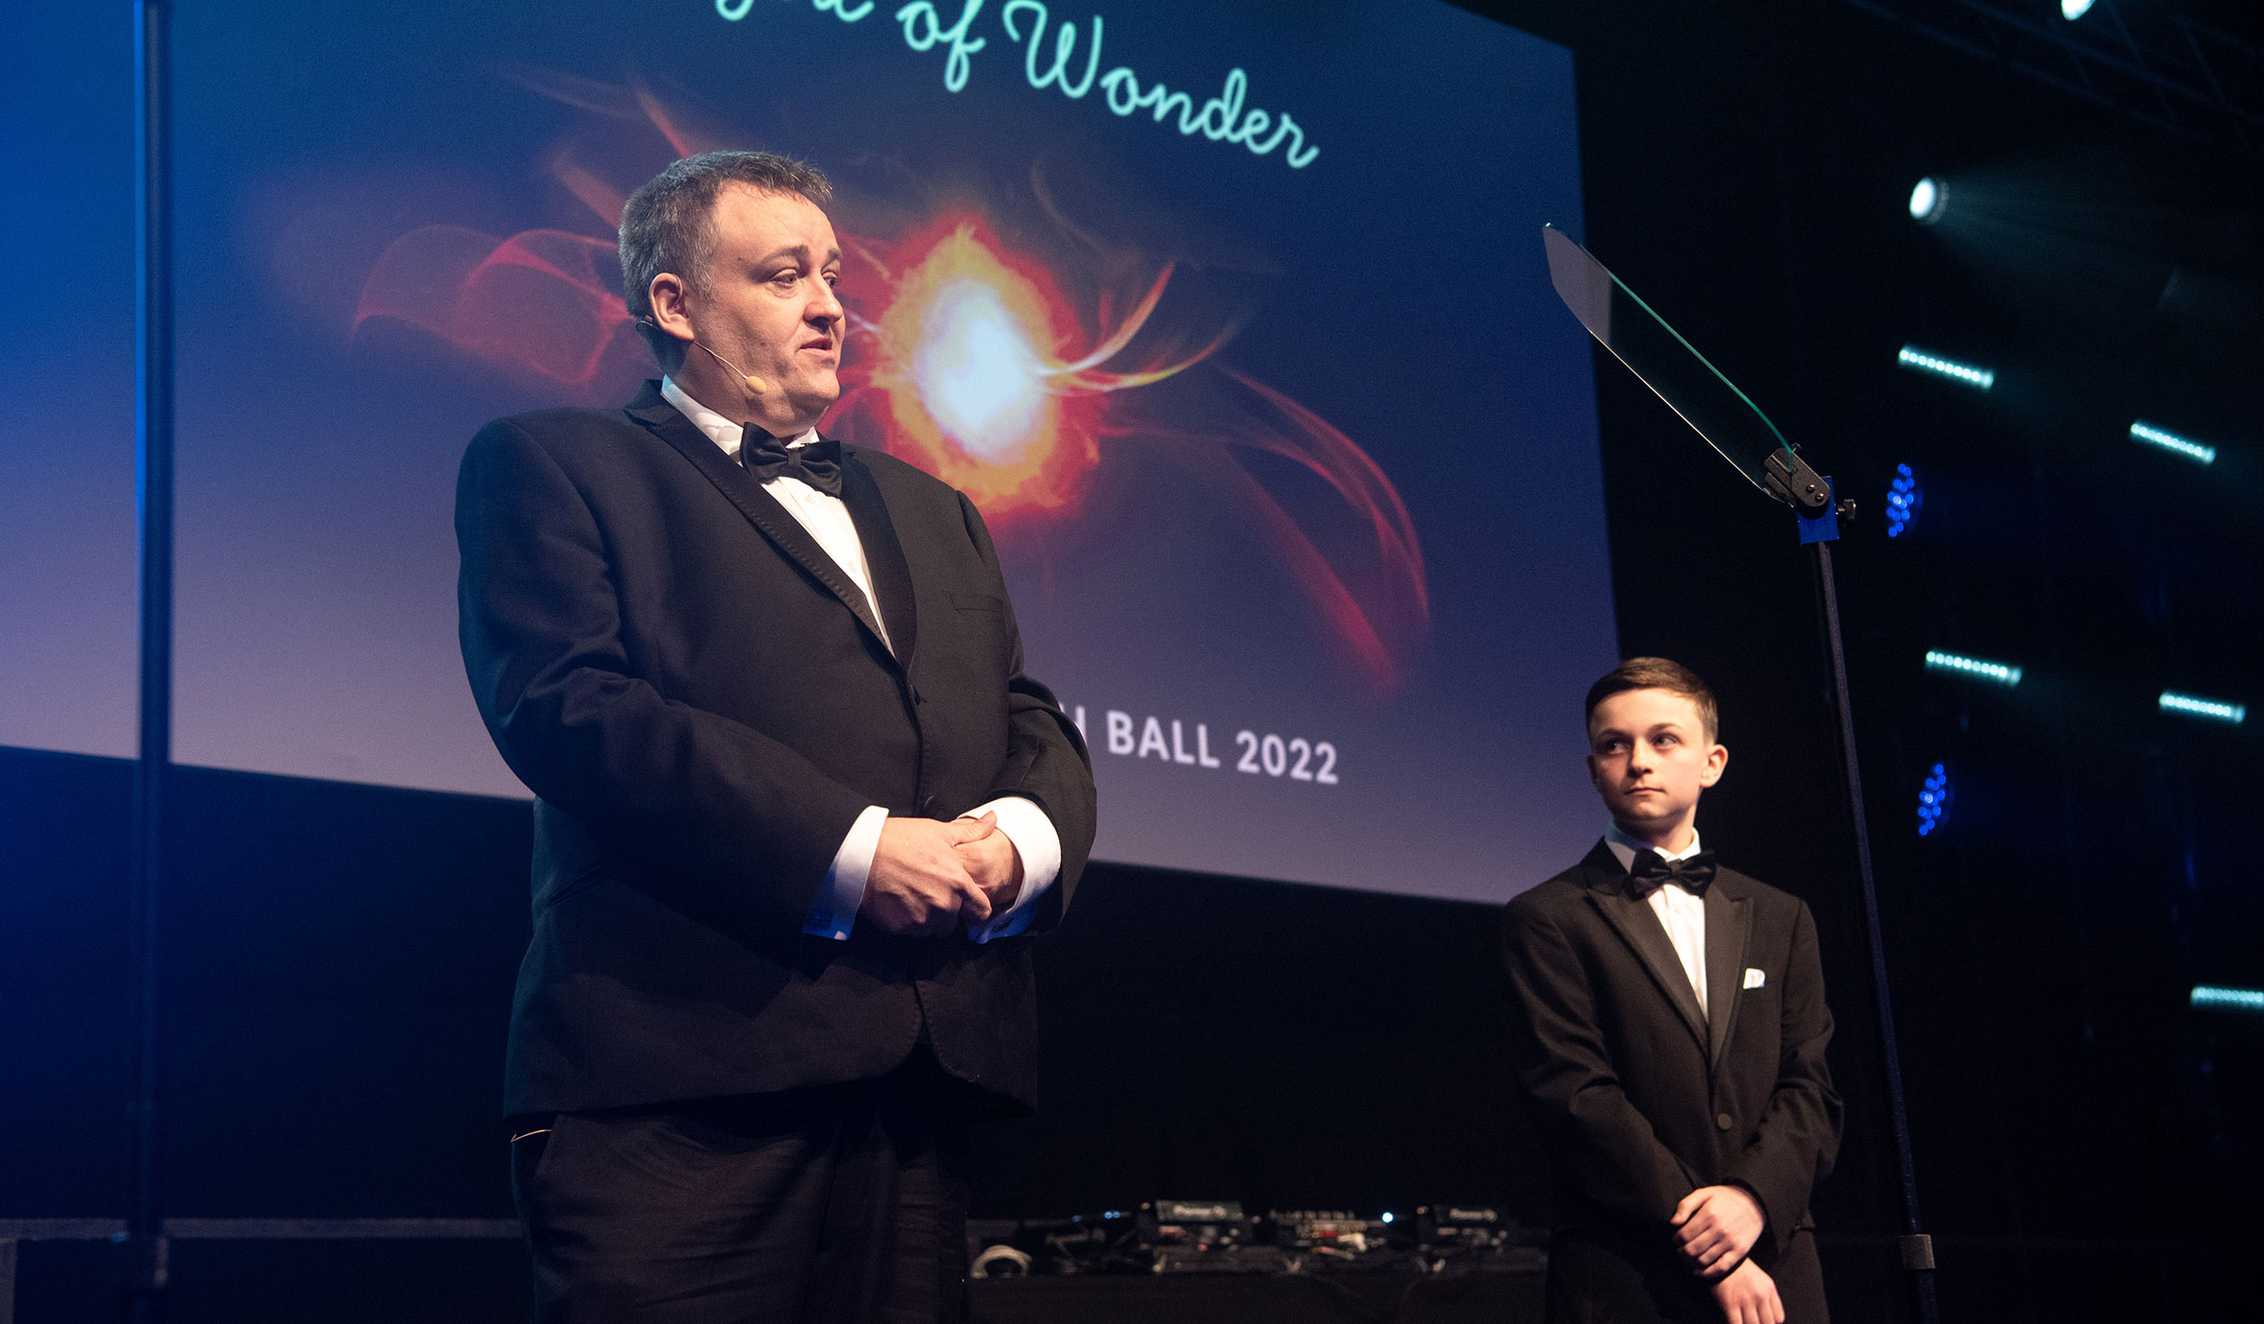 MakeAWish Ball raises over £300,000 for critically ill children